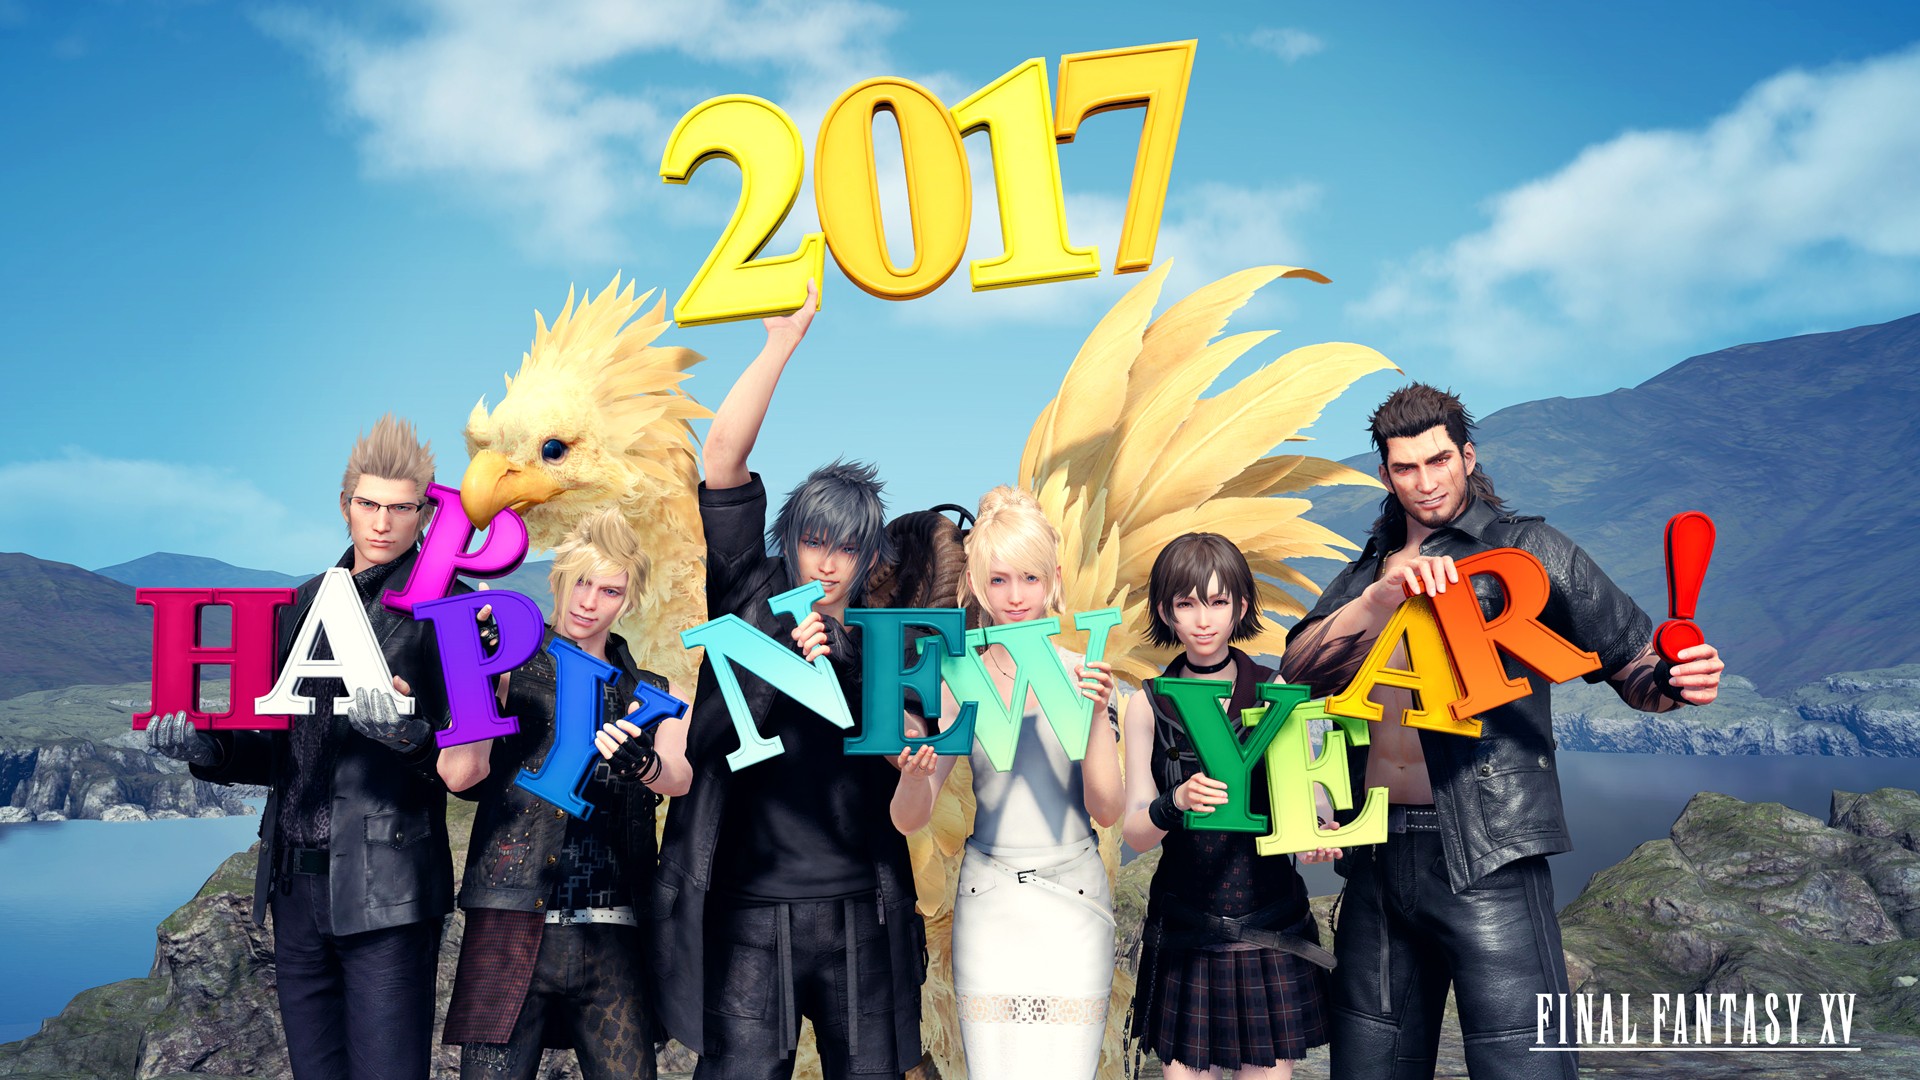 New Year, 2017 (Year), Final Fantasy XV Wallpaper